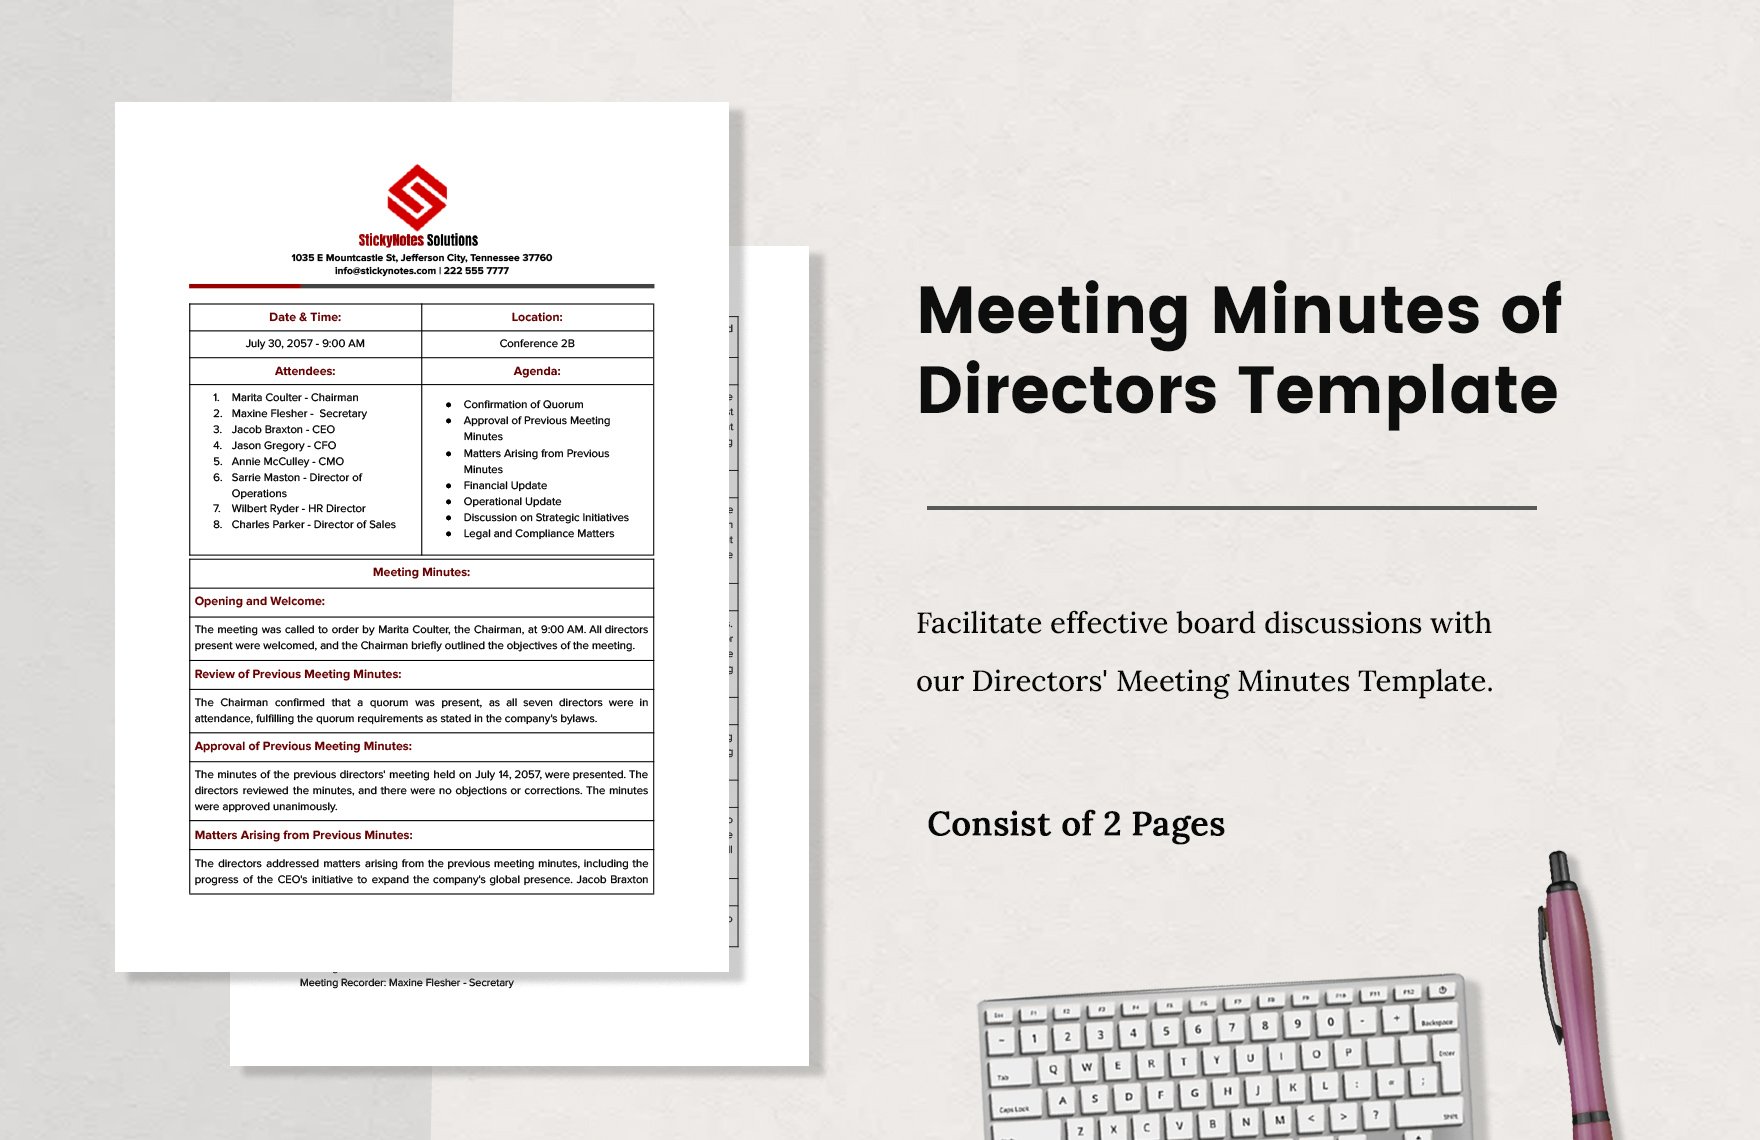 Meeting Minutes of Directors Template